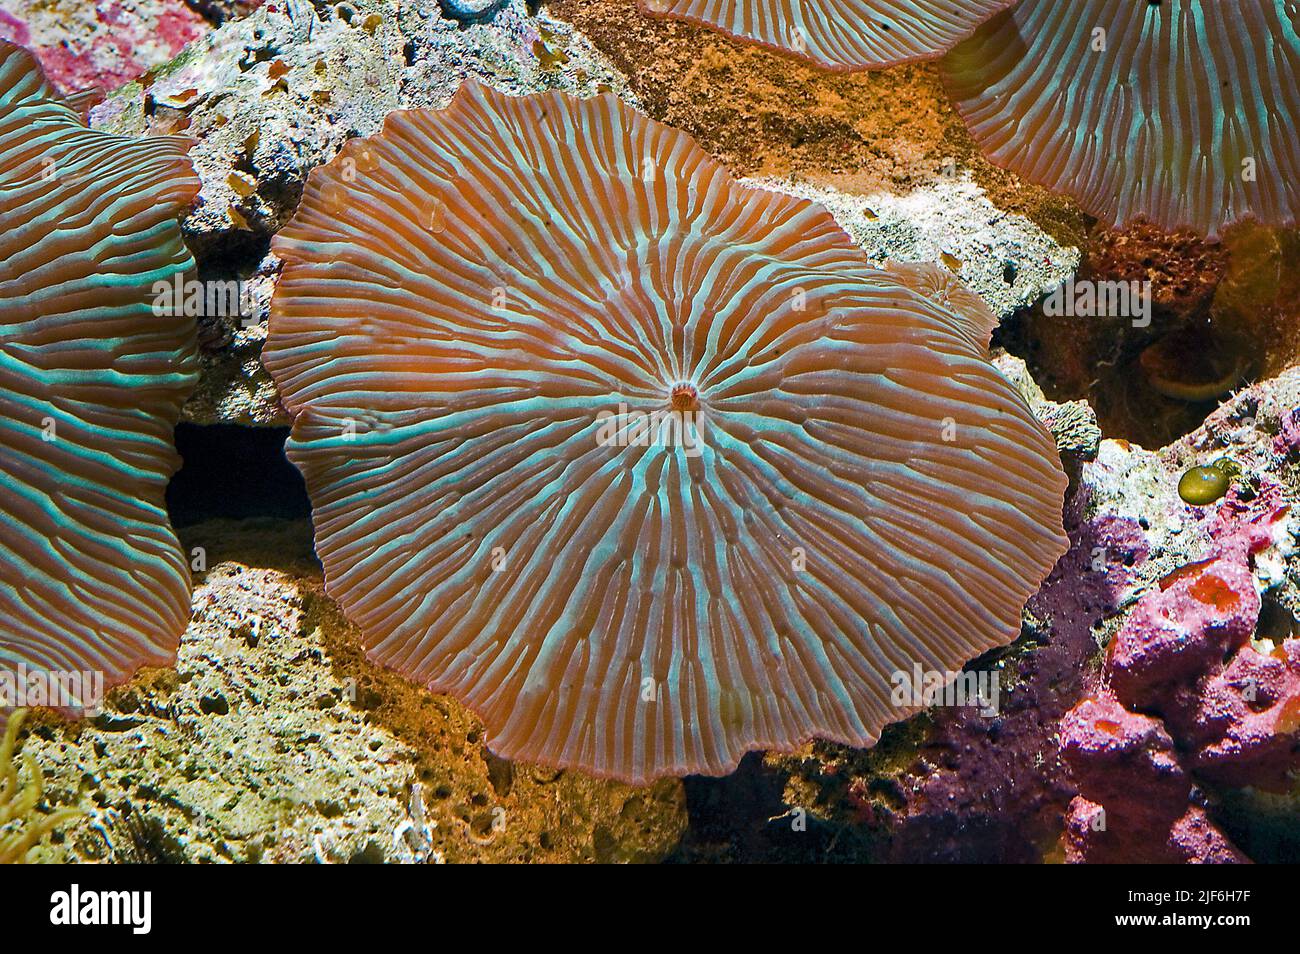 Mushroom-anemones from the genus Discosoma. Stock Photo